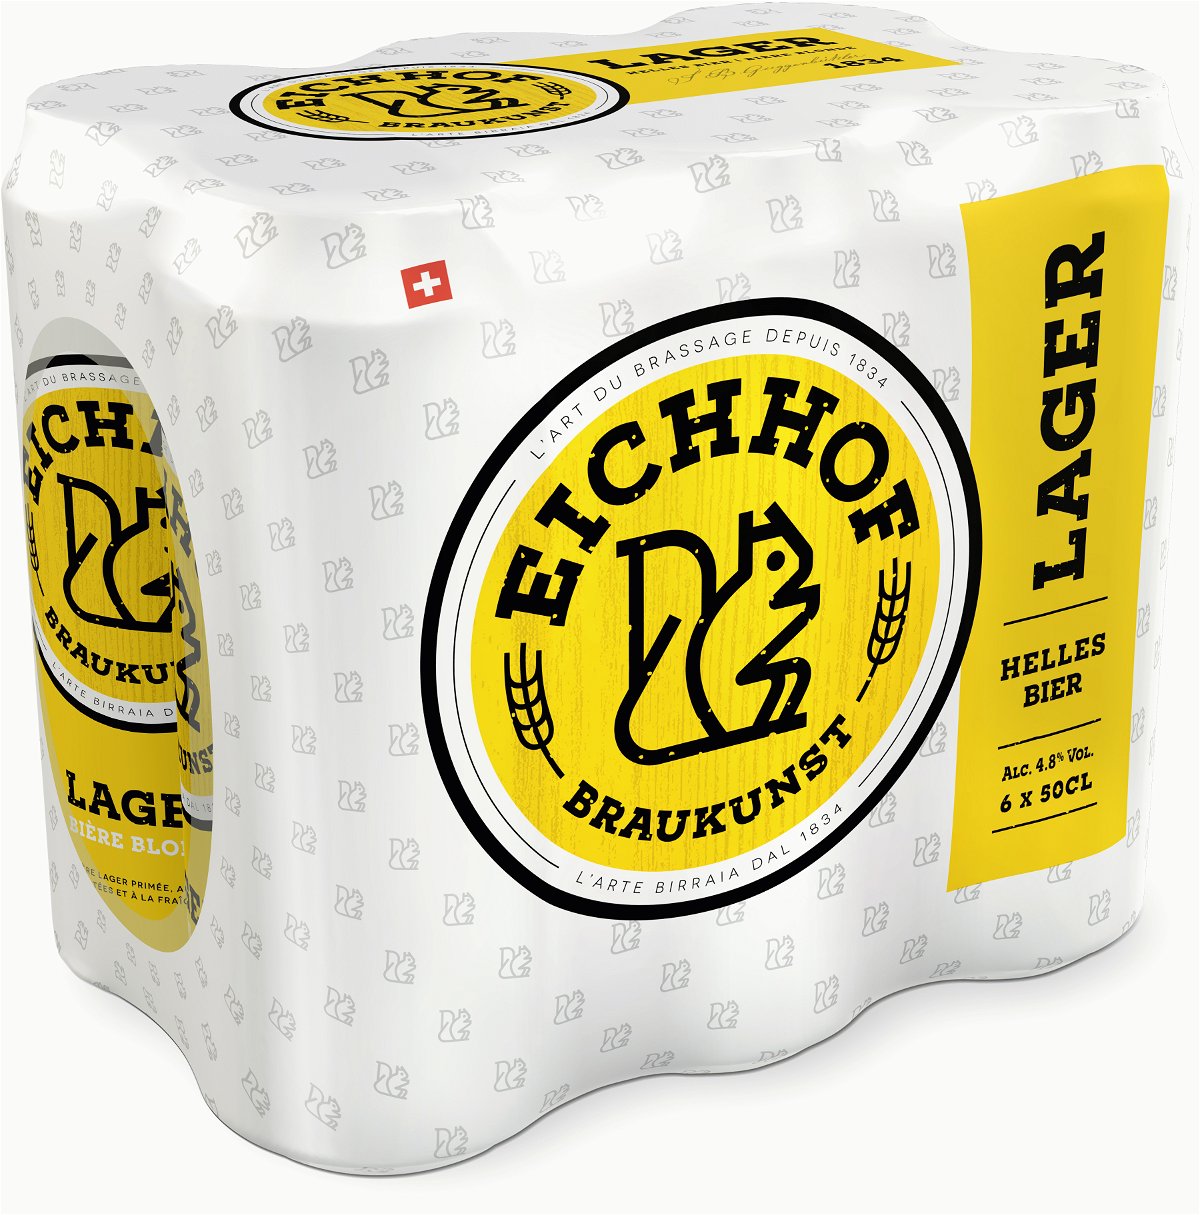 Eichhof Lager 4.8% 6 Pack